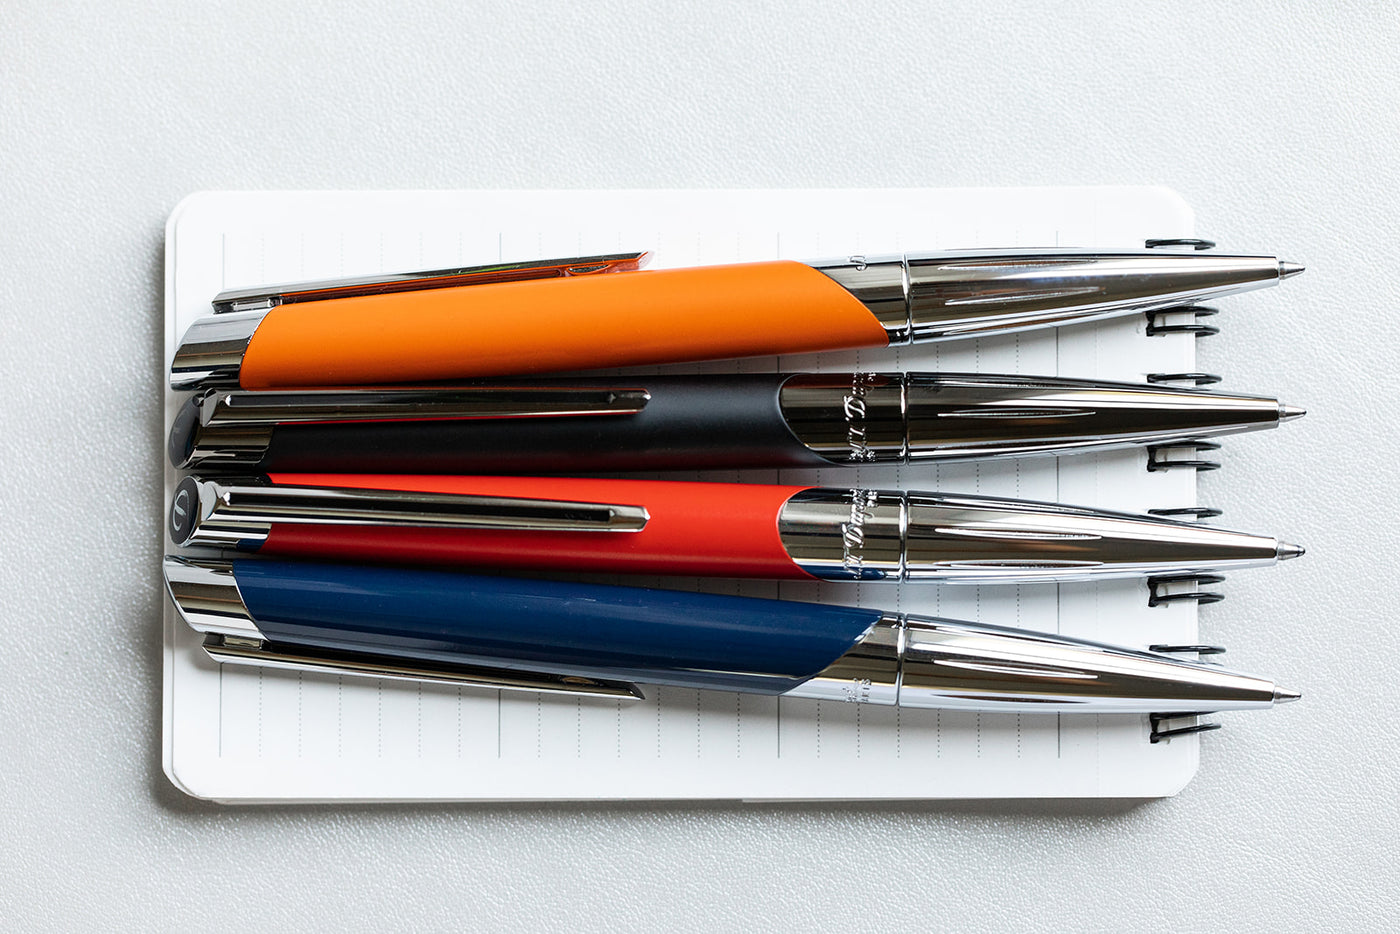 Kuretake Zig Millennium Drawing Pen Review – Ian Hedley